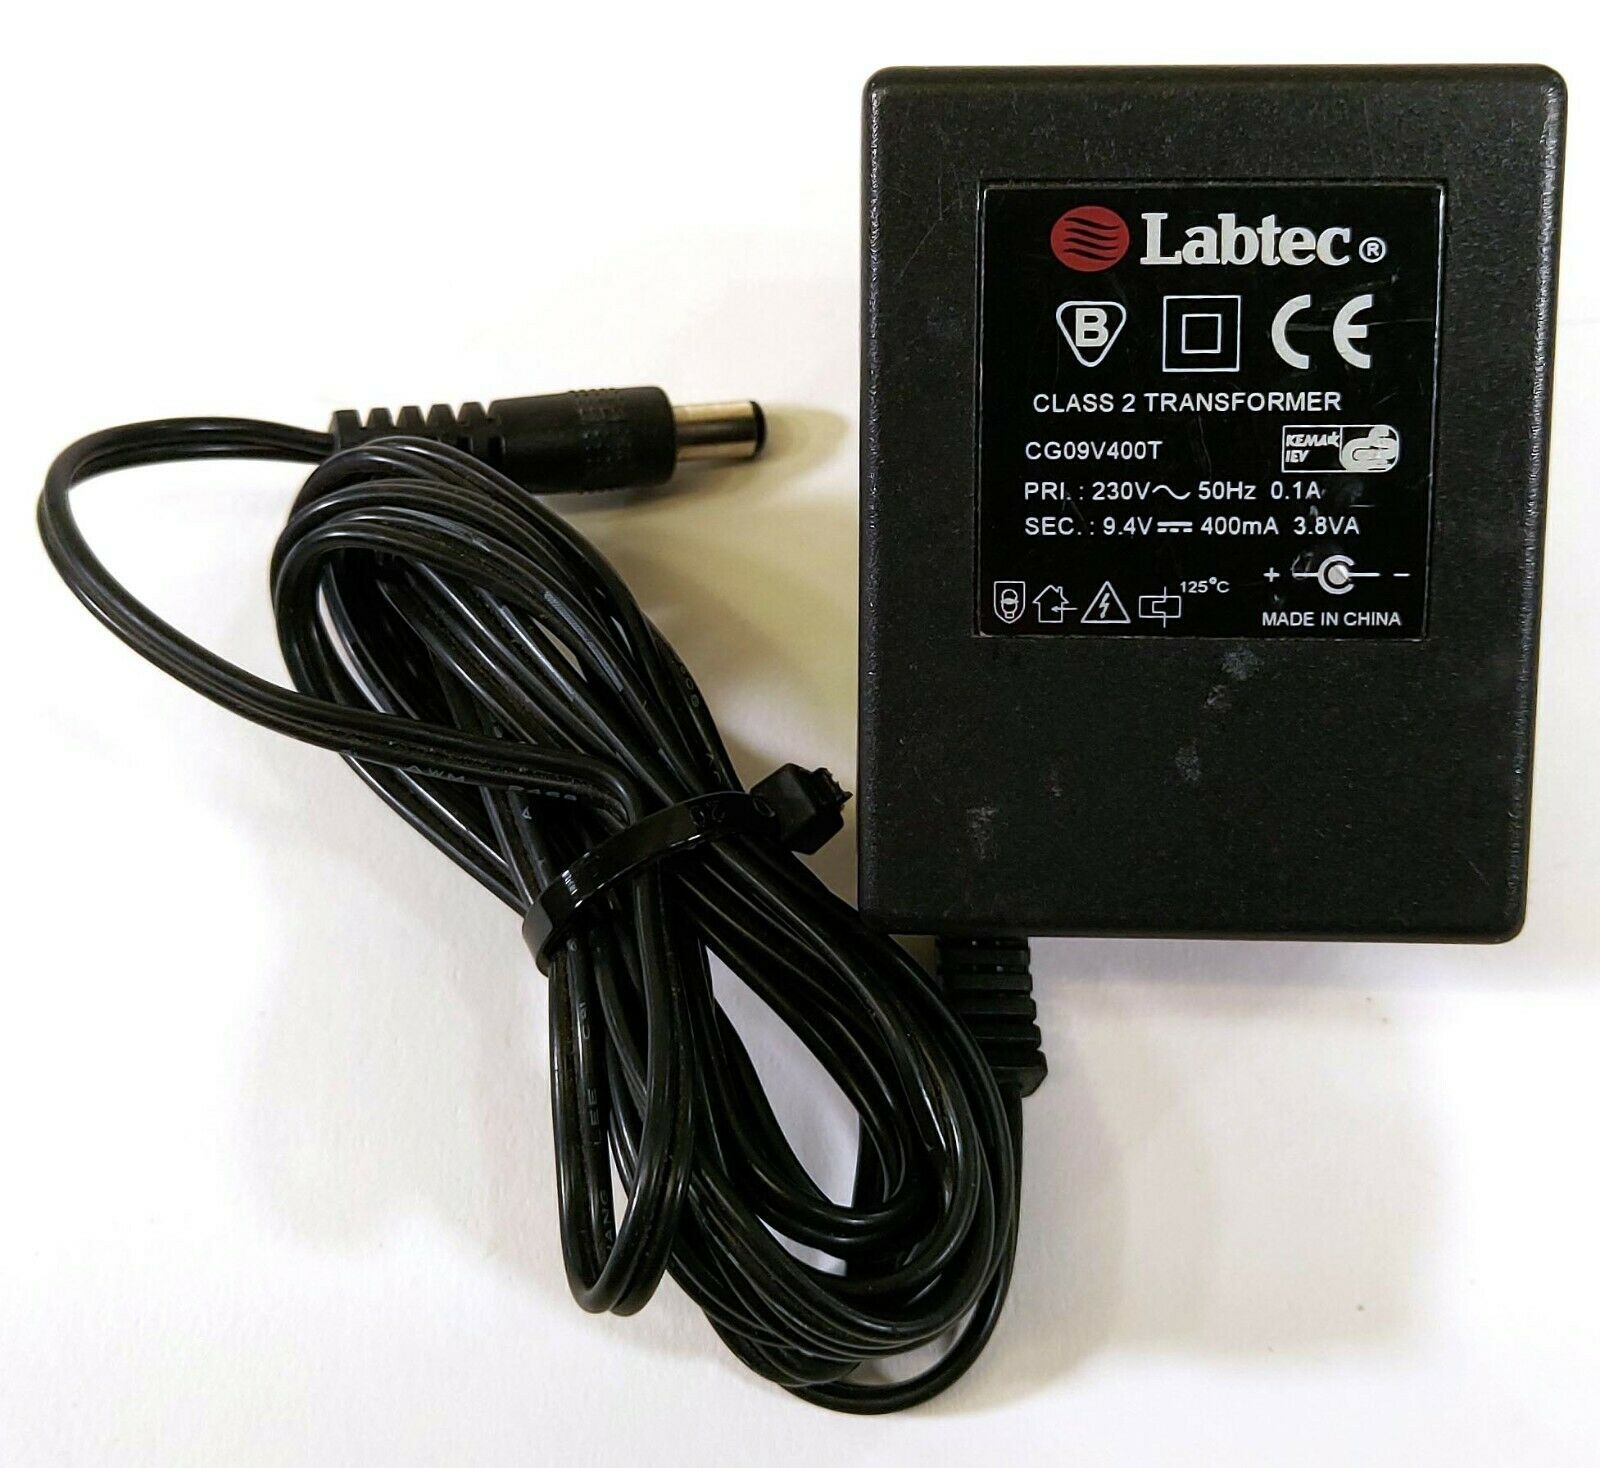 Labtec CG09V400T Transformer AC/DC Adapter 9.4V 400mA Original Charger D437 Output Current: 400 mA Compatible Brand: